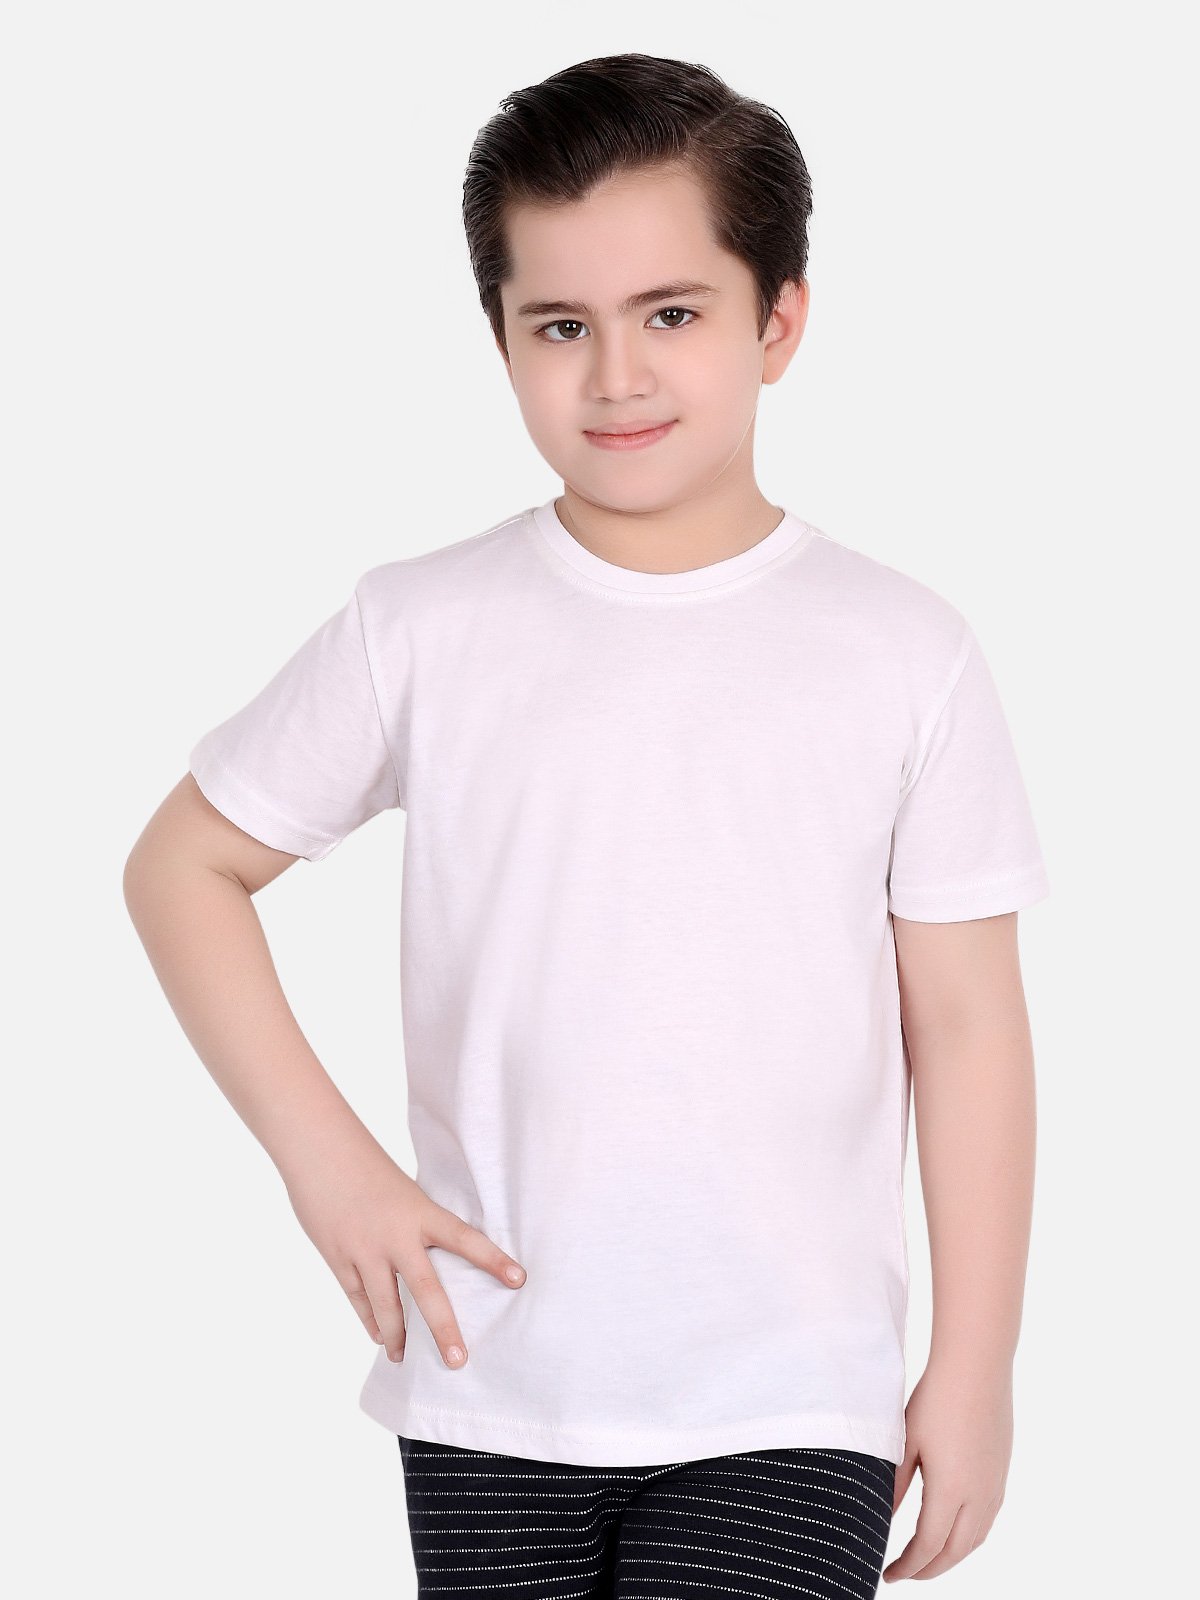 Boy's White Half Sleeves Basic Tee - EBTBT22-001